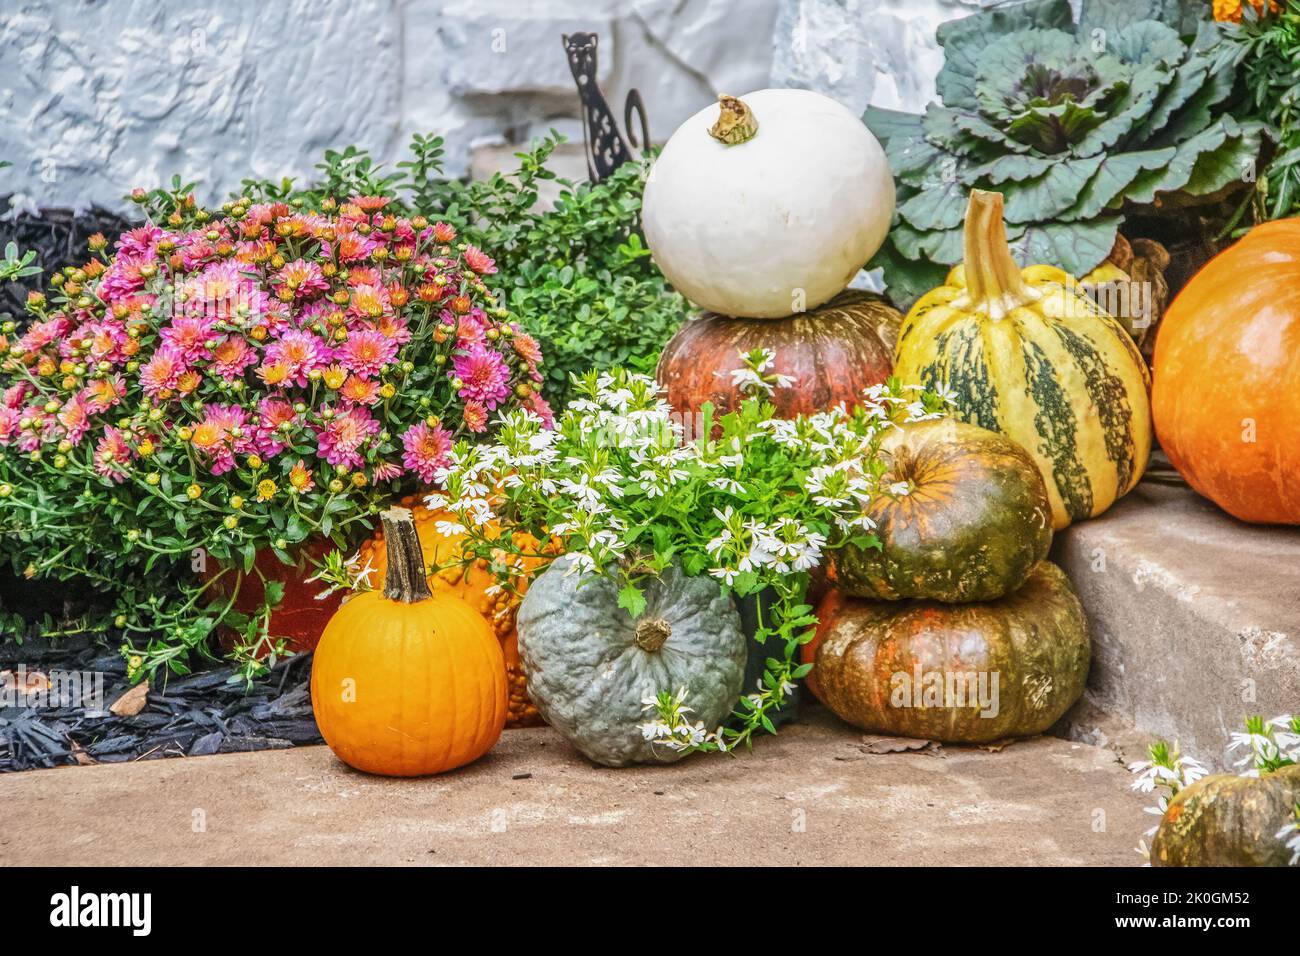 Autumn outdoor pumpkin and flower arrangement on steps - selective focus Stock Photo